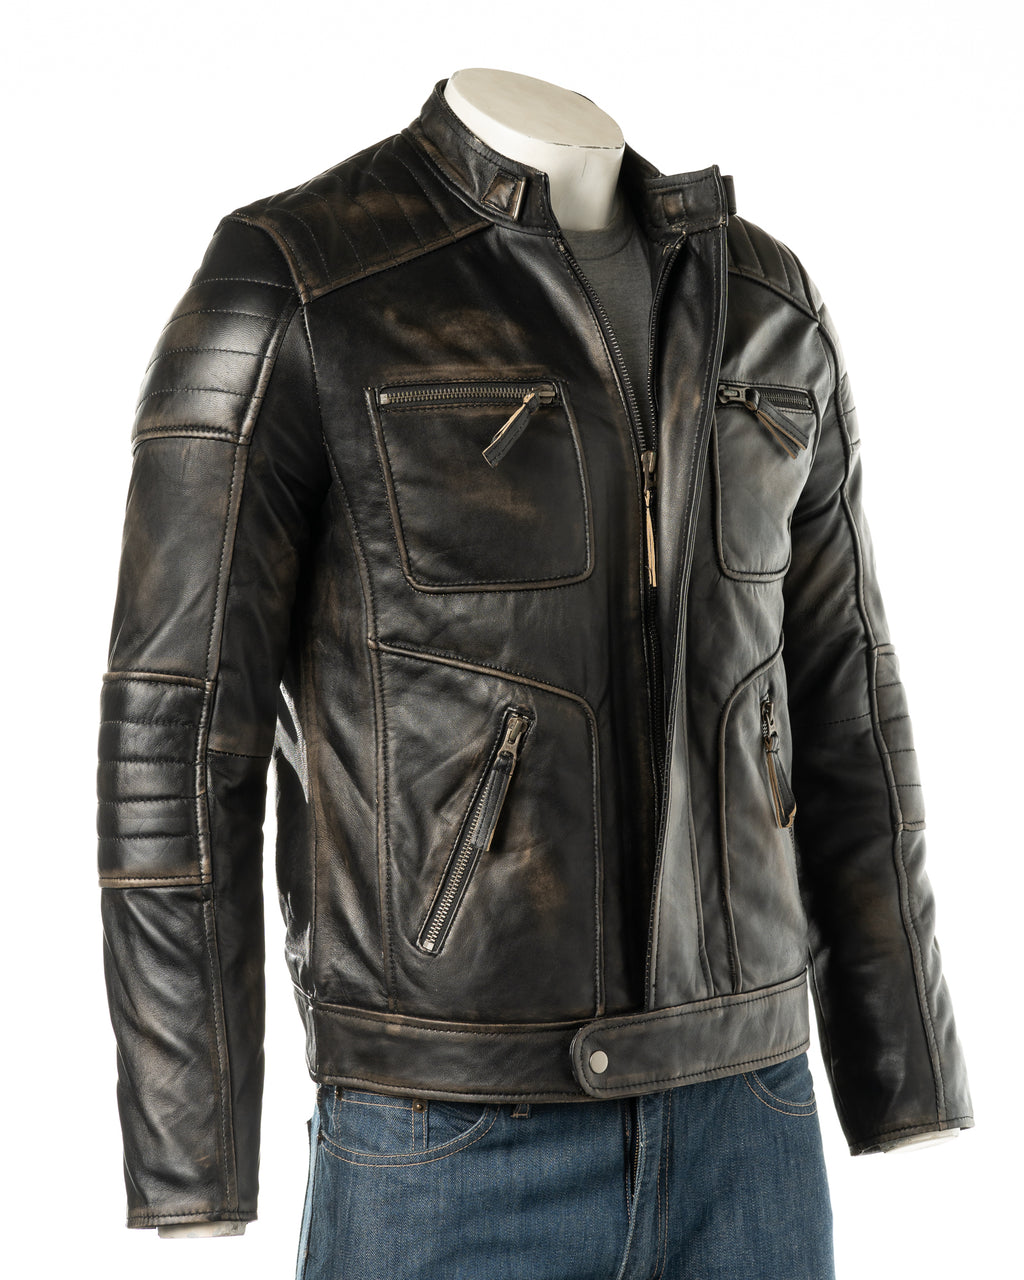 Mens Antique Black Leather Biker Style Jacket: Edoardo